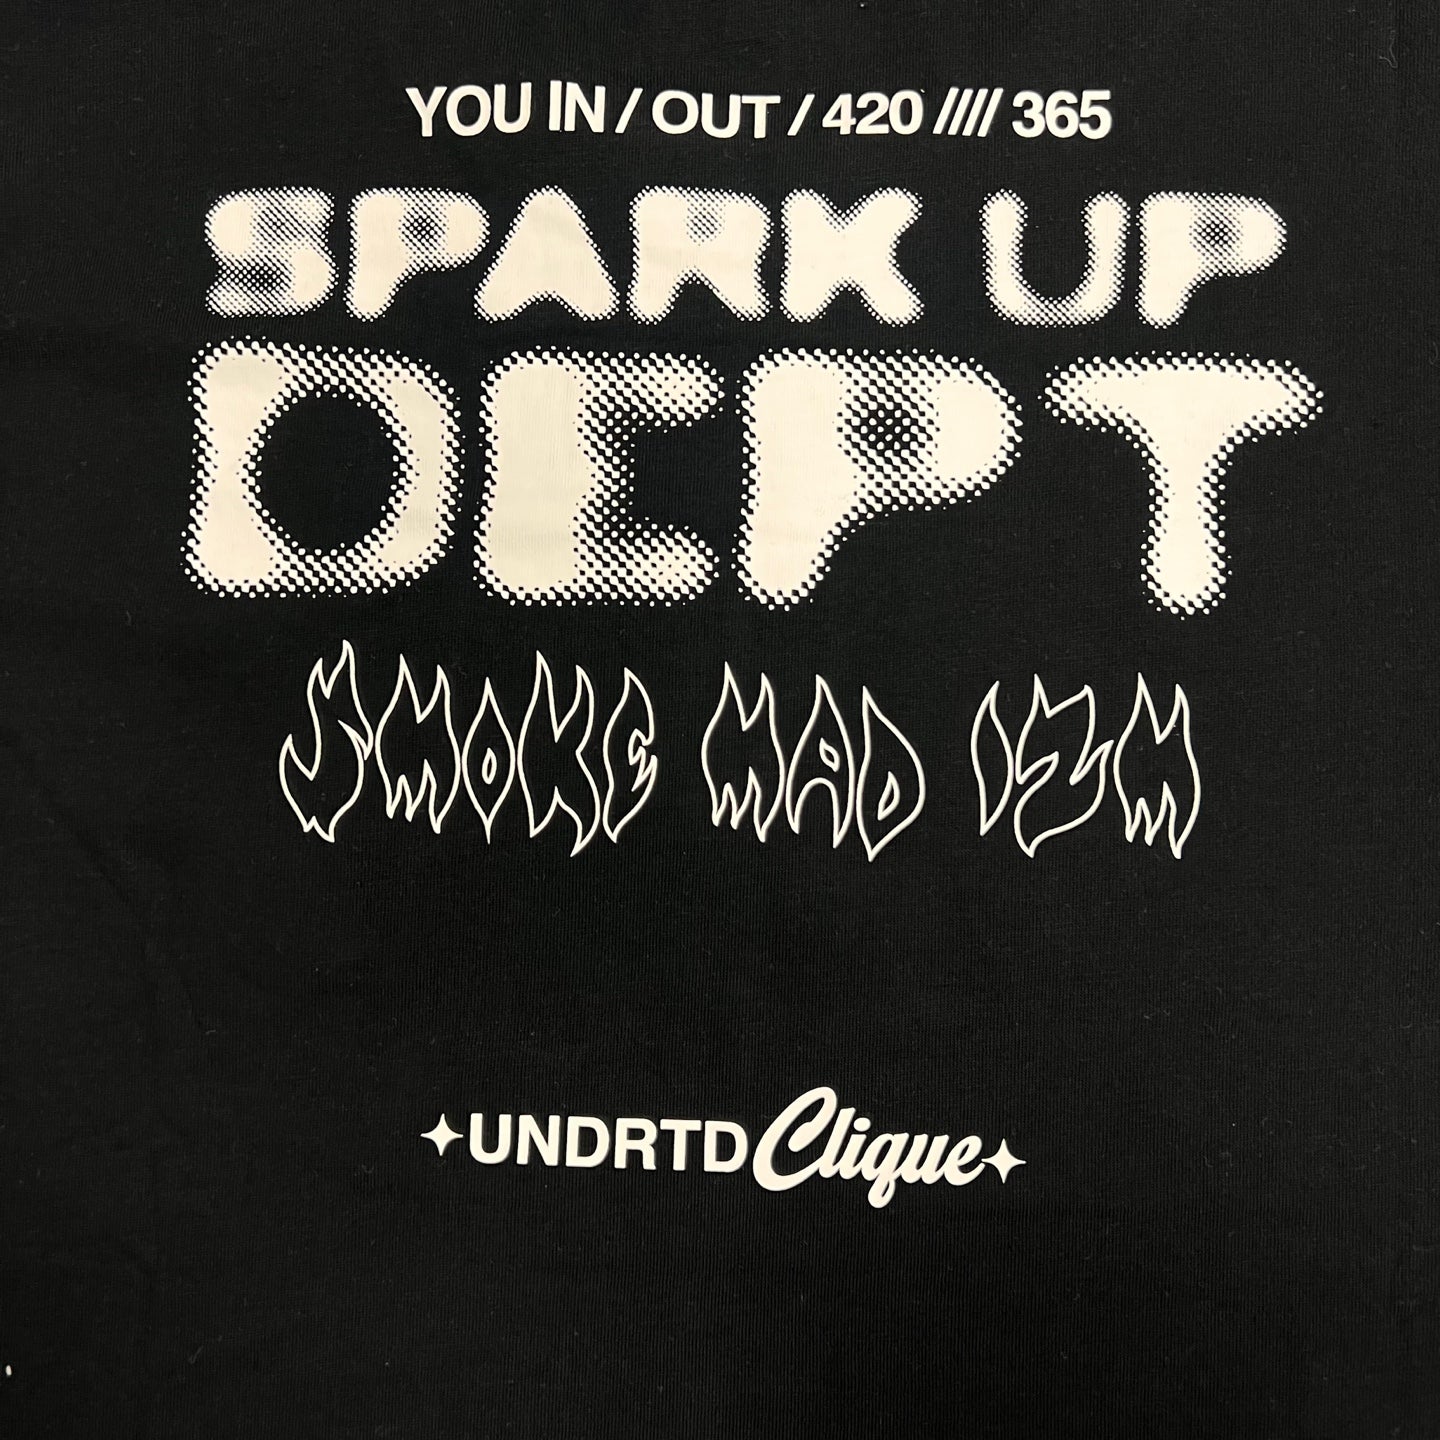 HIGHLY UNDRTD Rackgoods Graphic T-Shirt